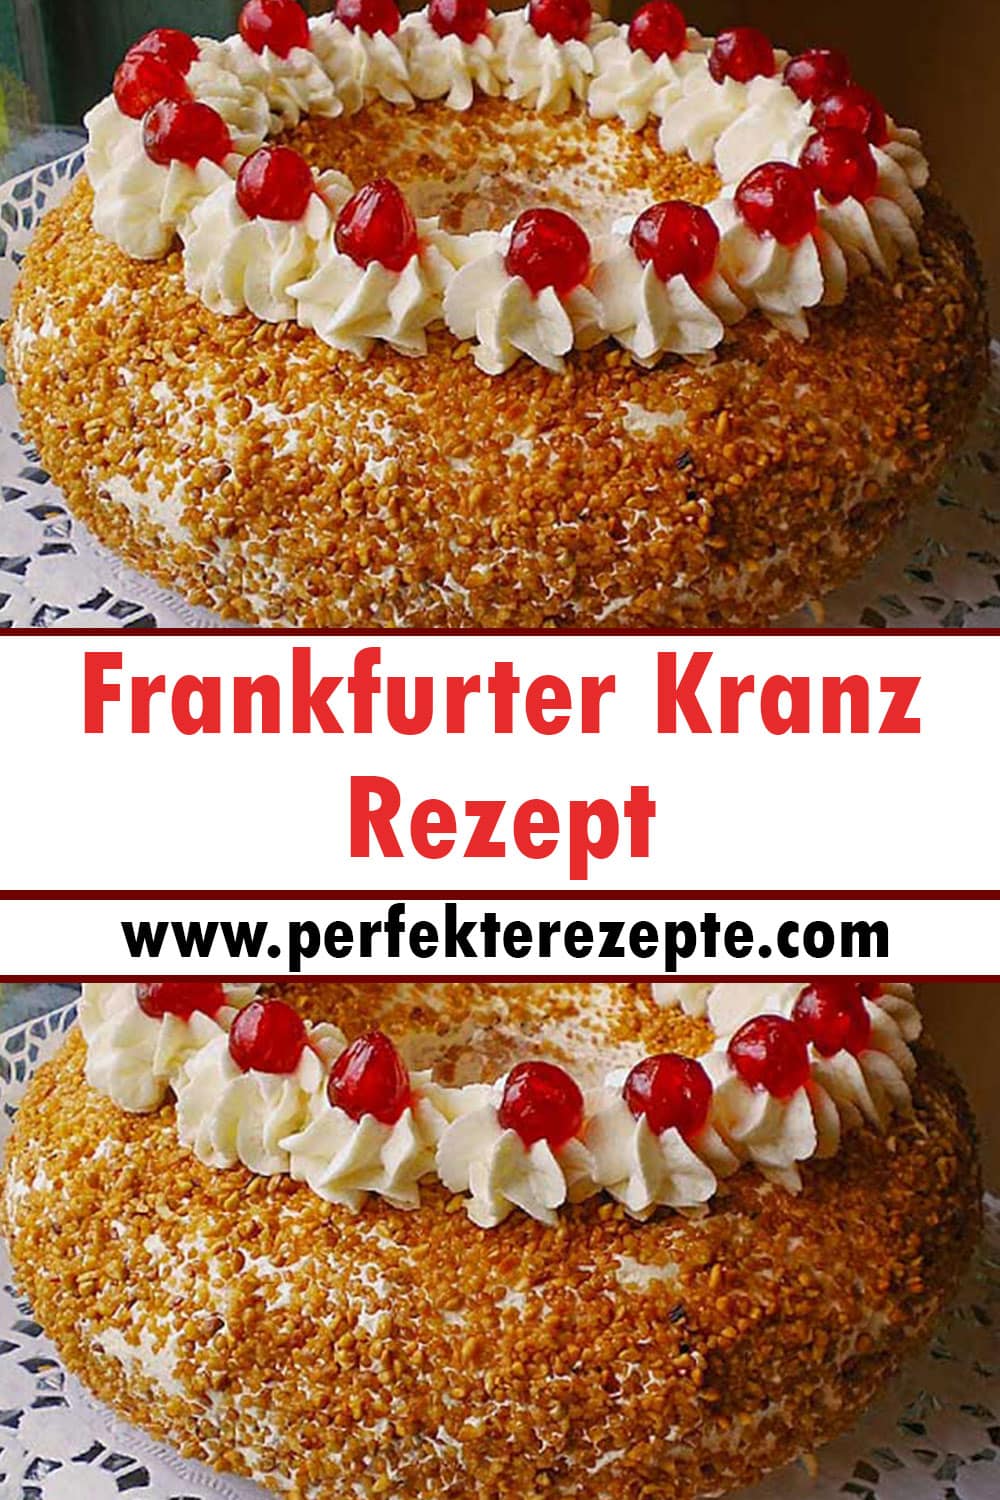 Frankfurter Kranz Rezept